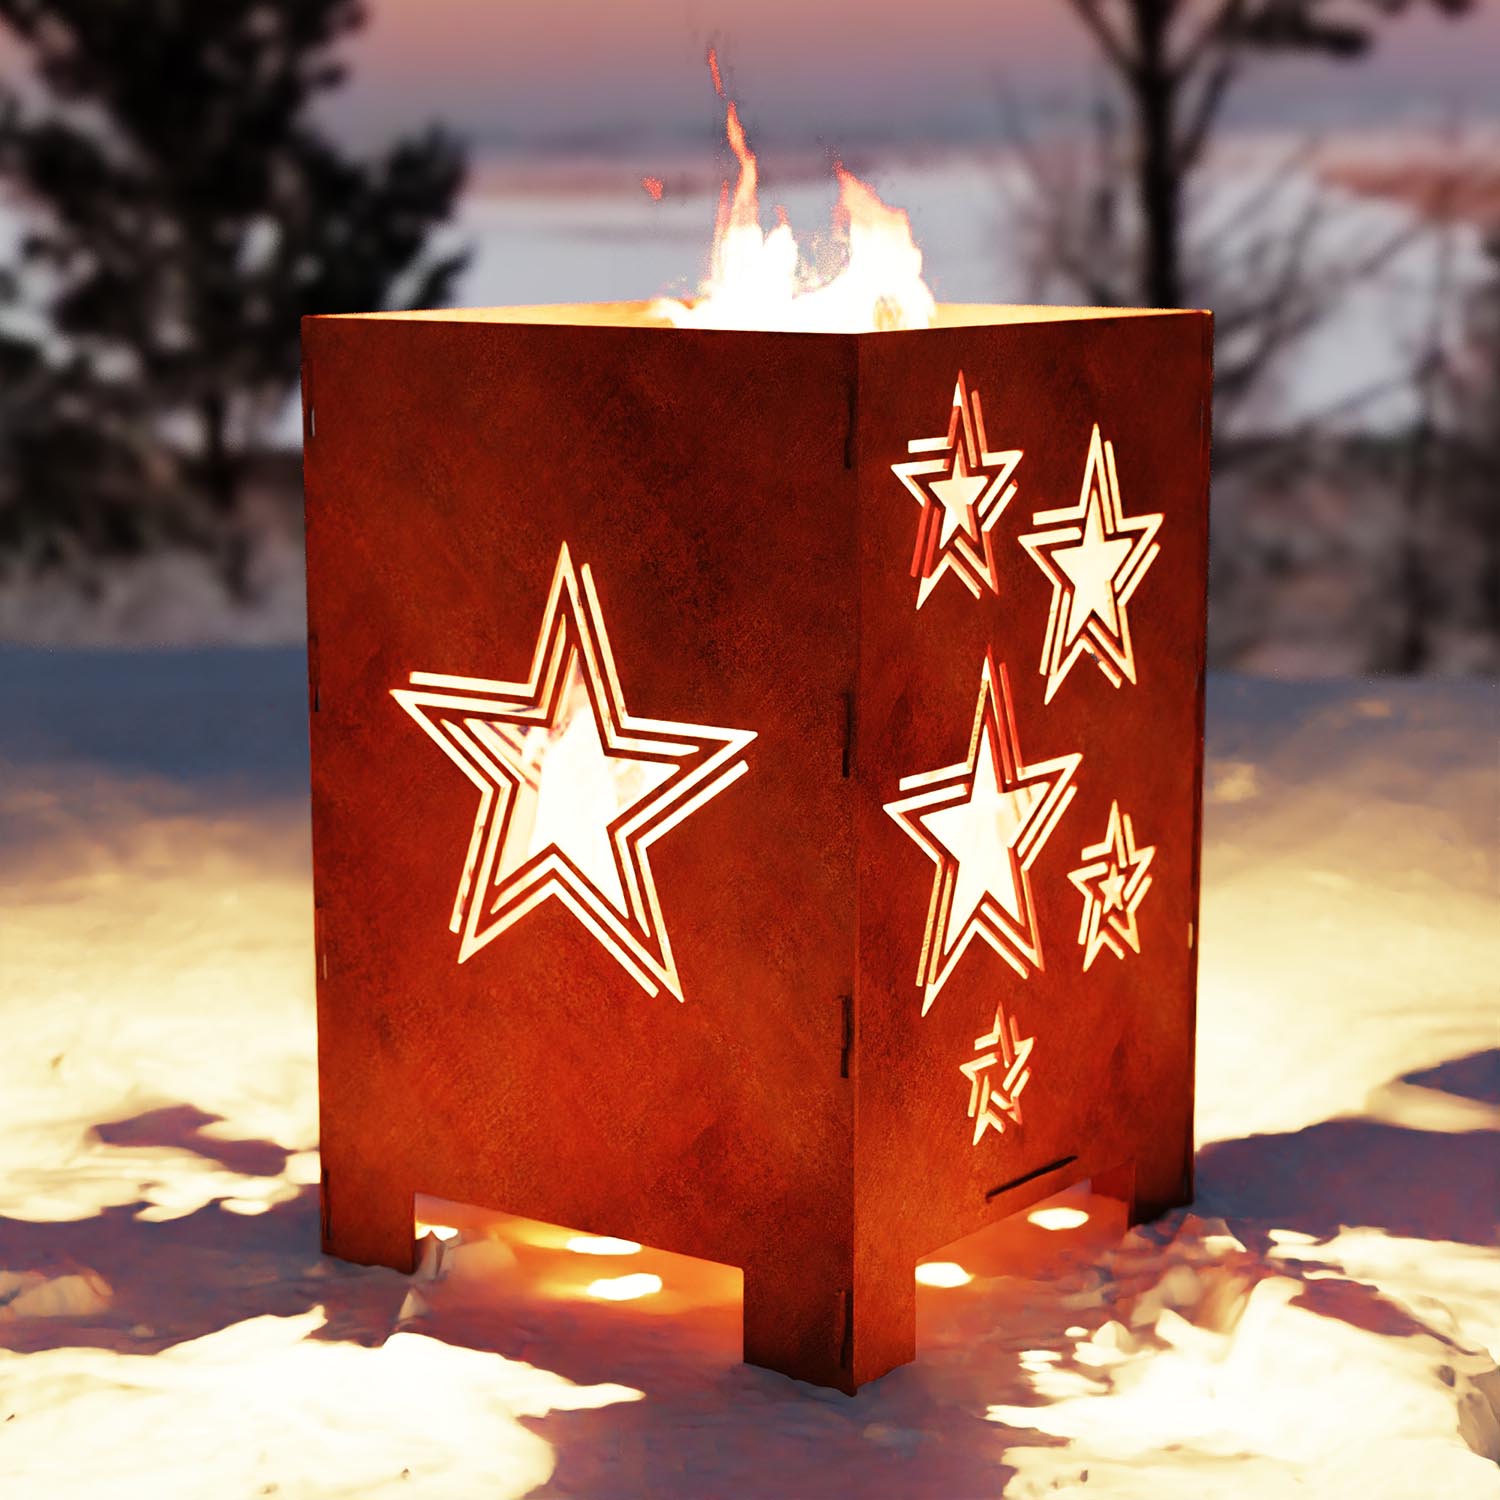 Feuerkorb aus Stahl, Motiv Sterne, 40 x 40 x 60 cm, Materialstärke 4 mm